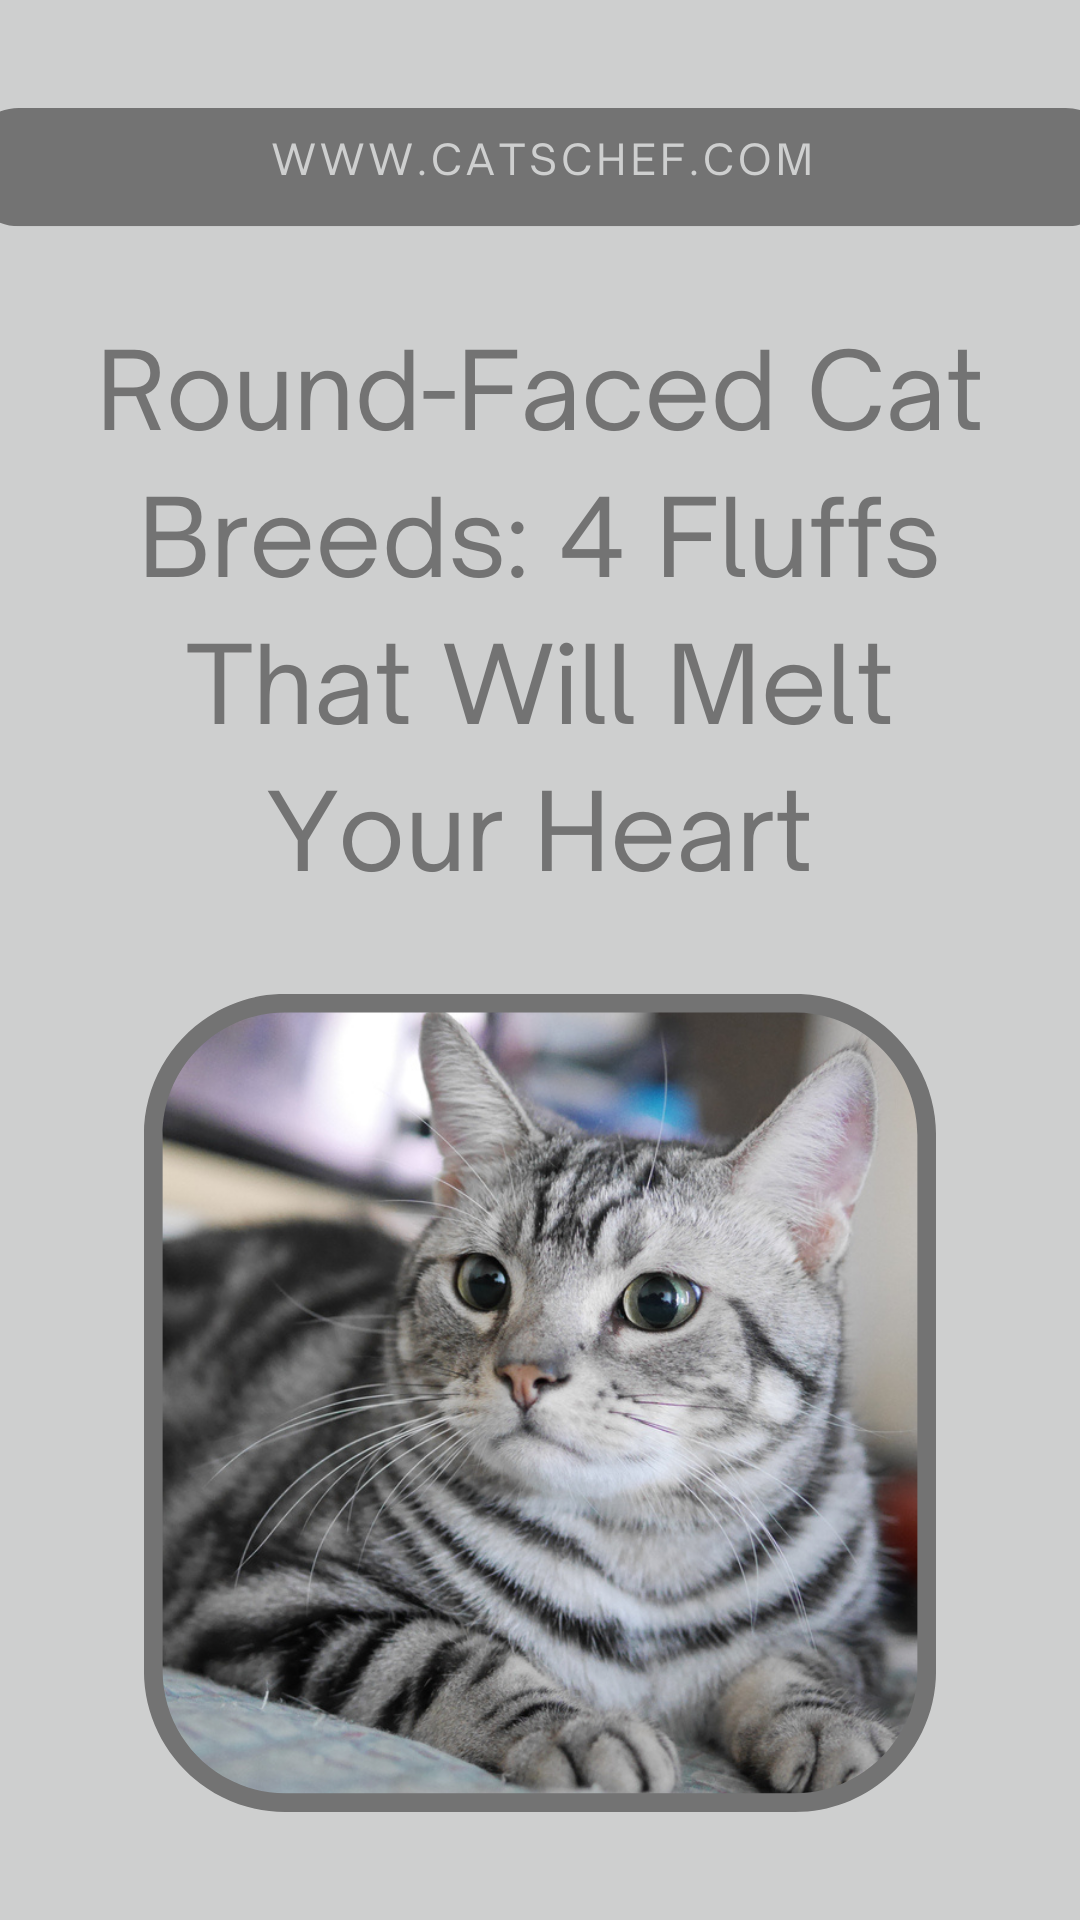 Round-Faced Cat Breeds: 4 Fluffs That Will Melt Your Heart